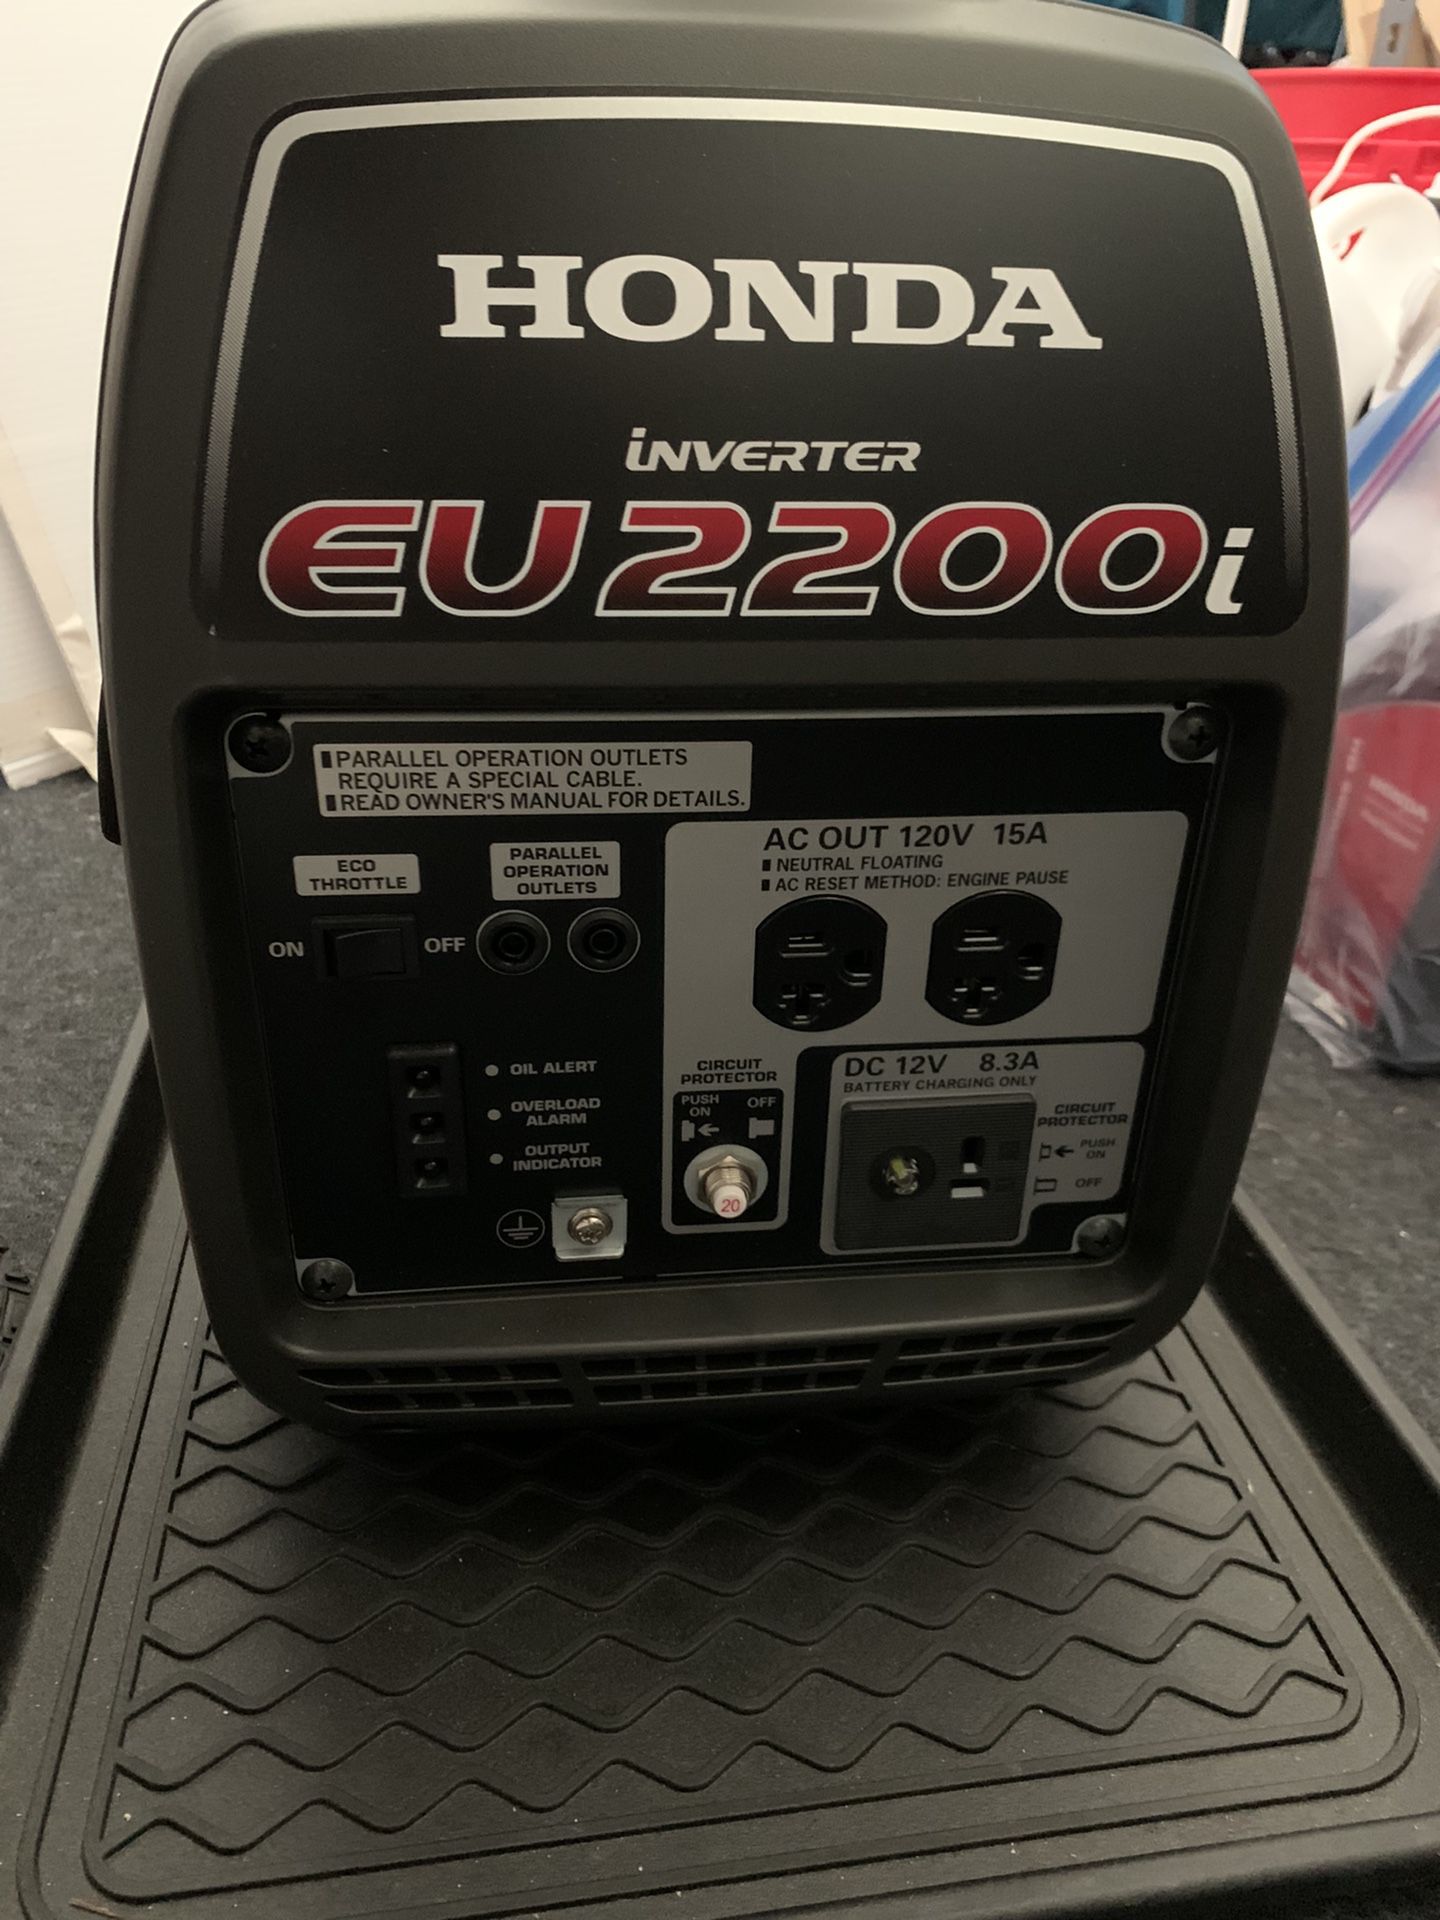 Honda (Inverter) Generator EU2200i